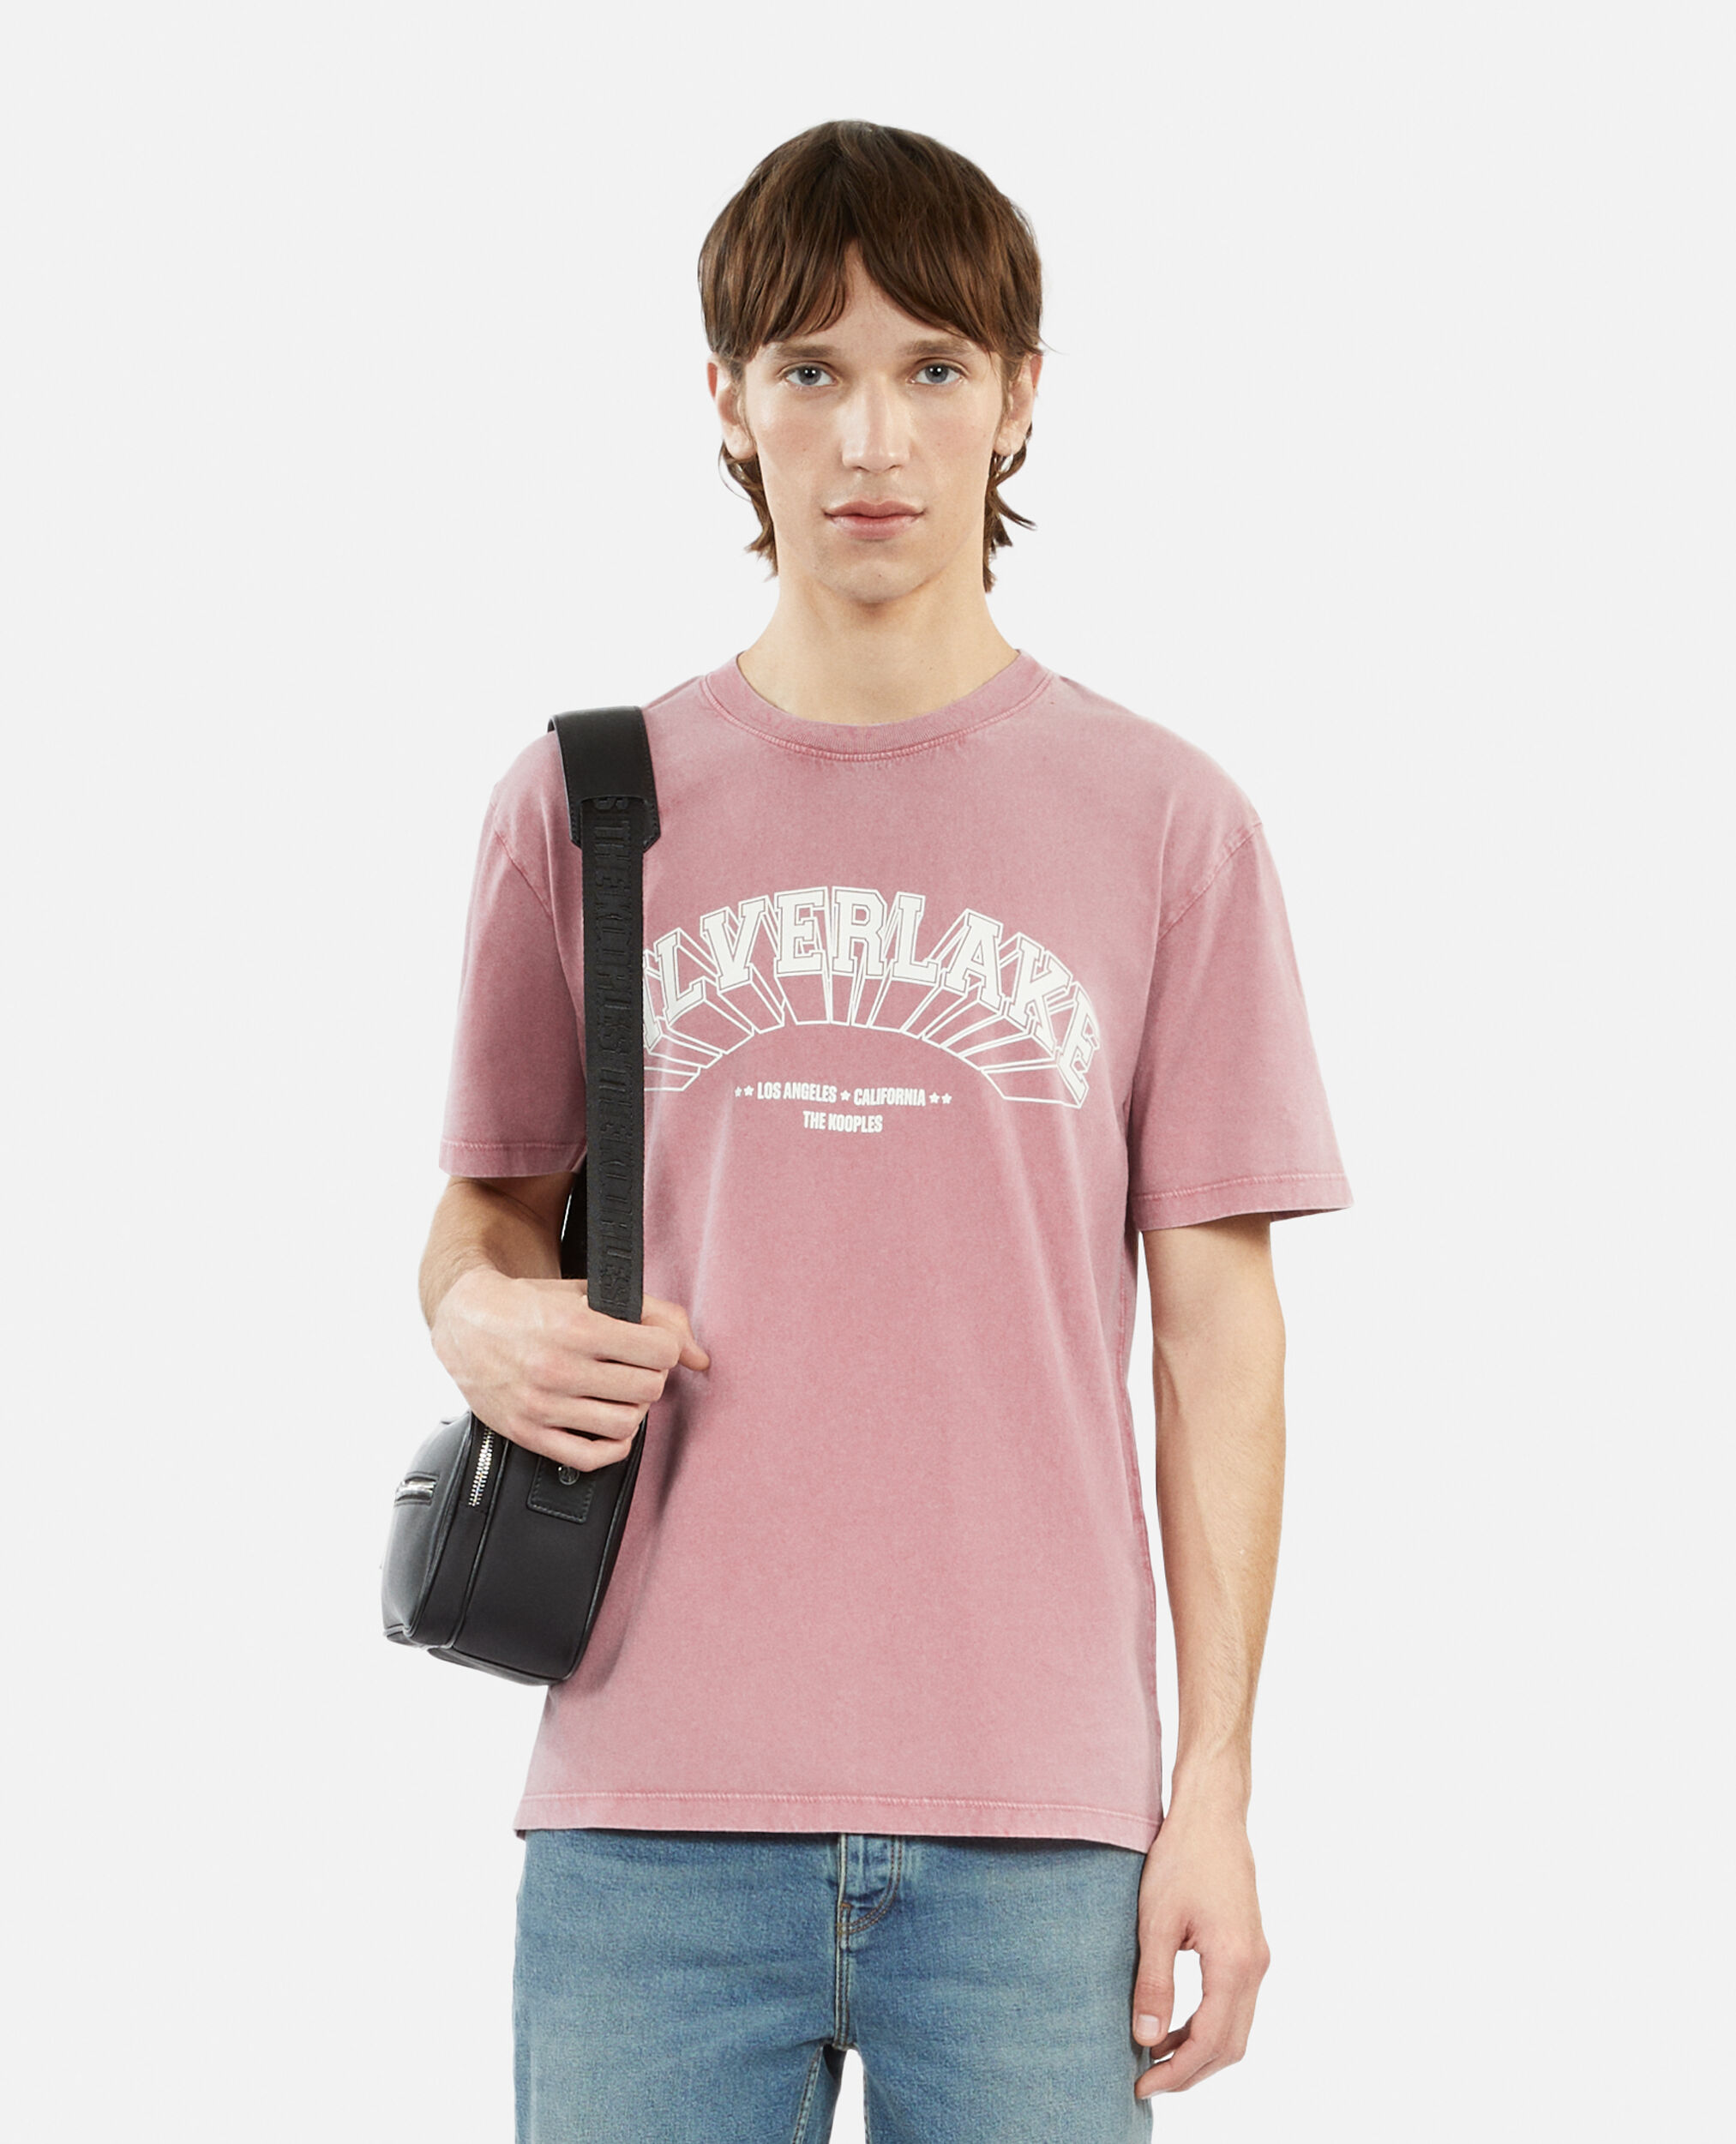 Hellrosa T-Shirt mit Silverlake-Siebdruck, PINK WOOD, hi-res image number null